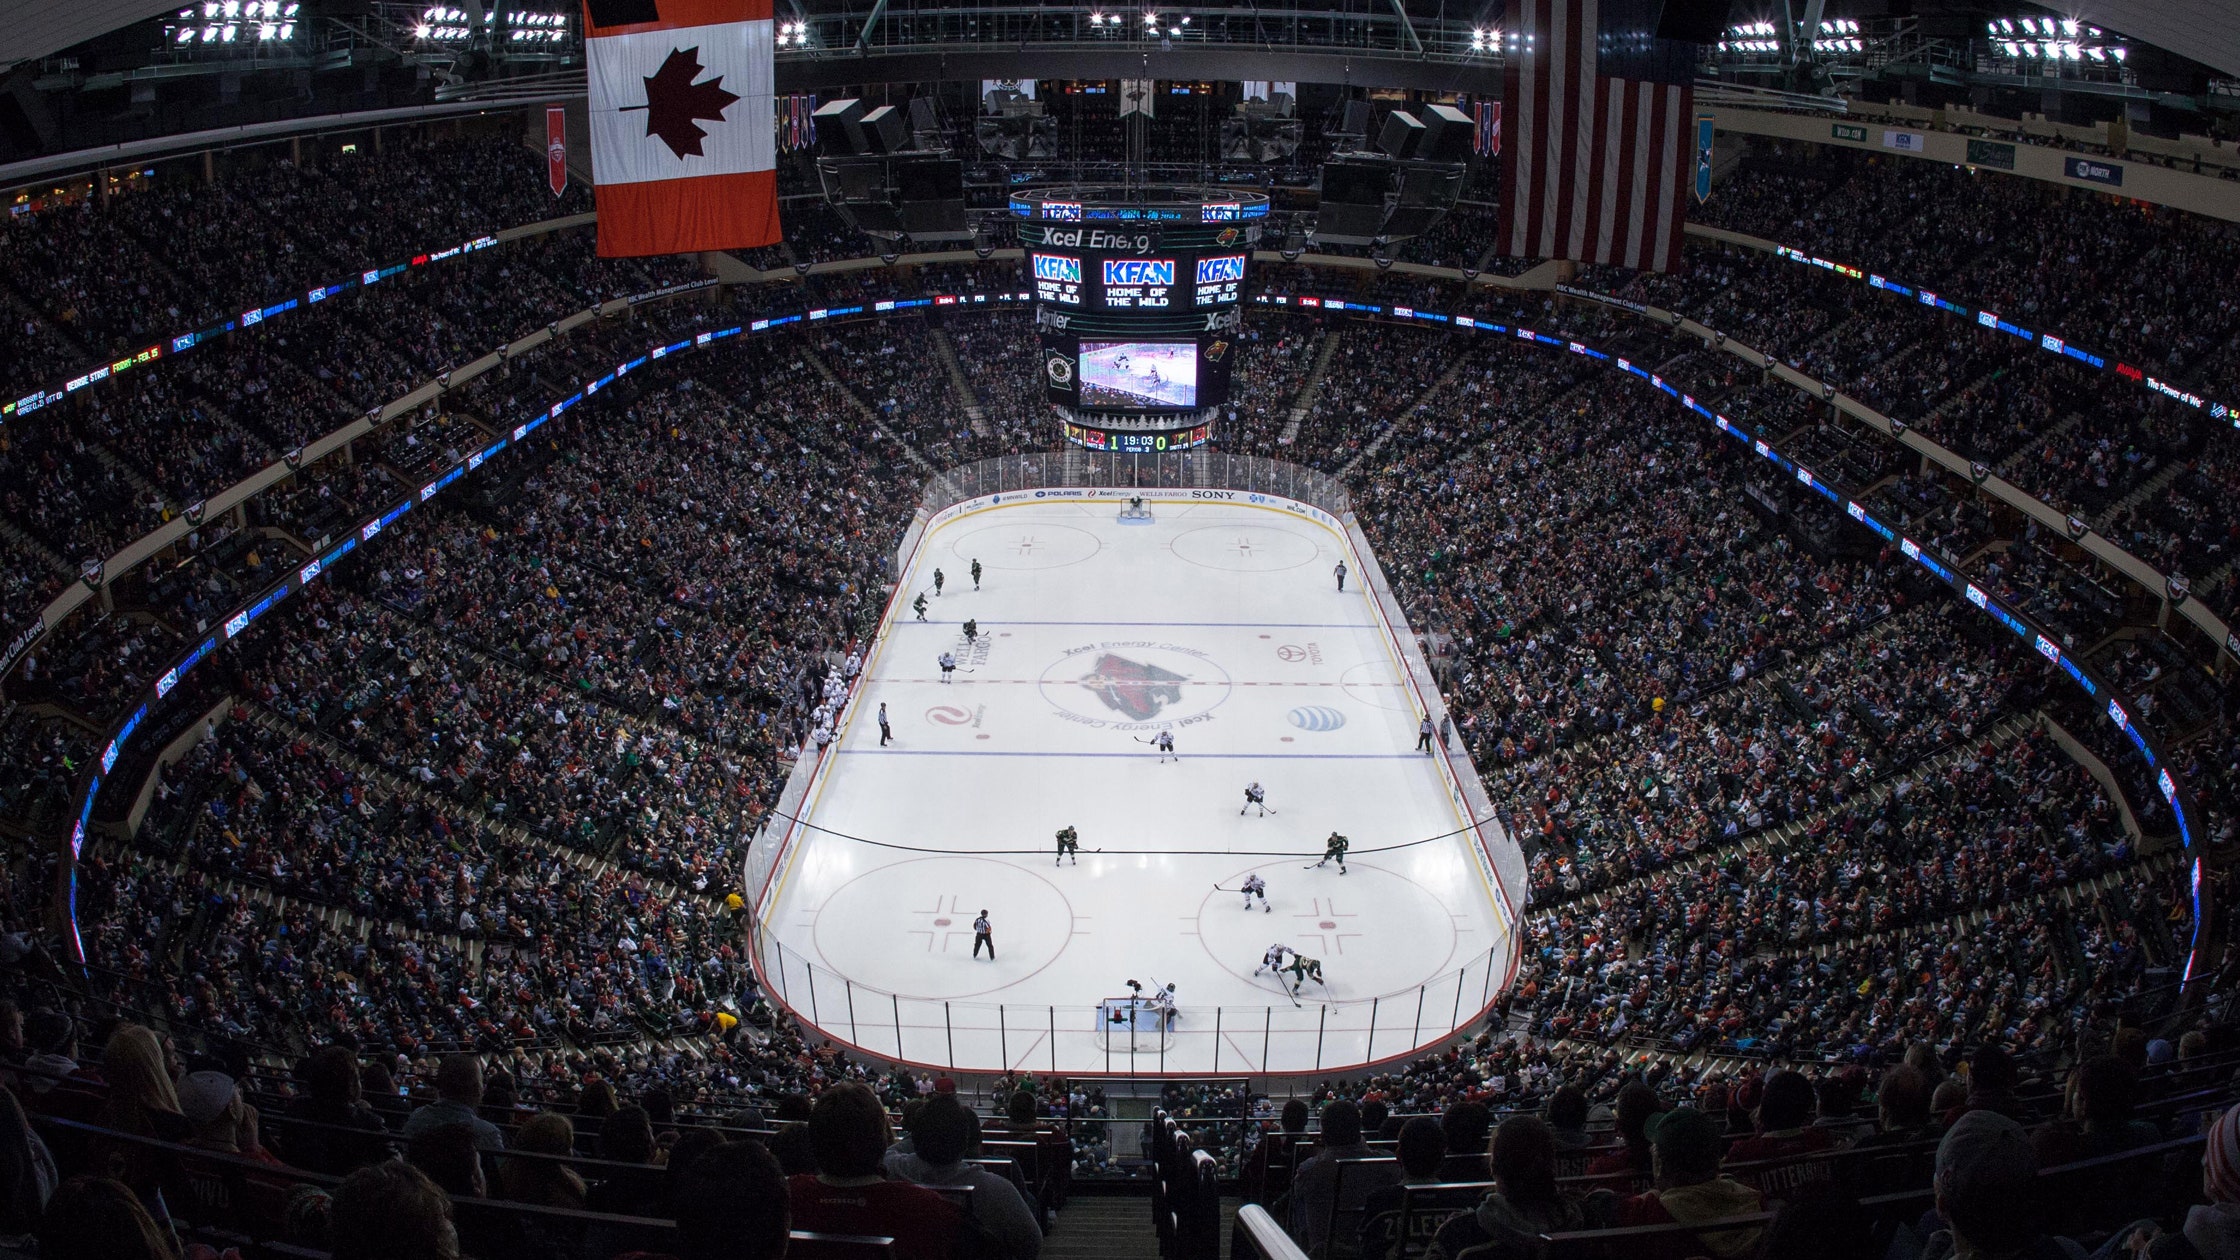 NHL News: Minnesota Wild to practice at Wells Fargo Arena